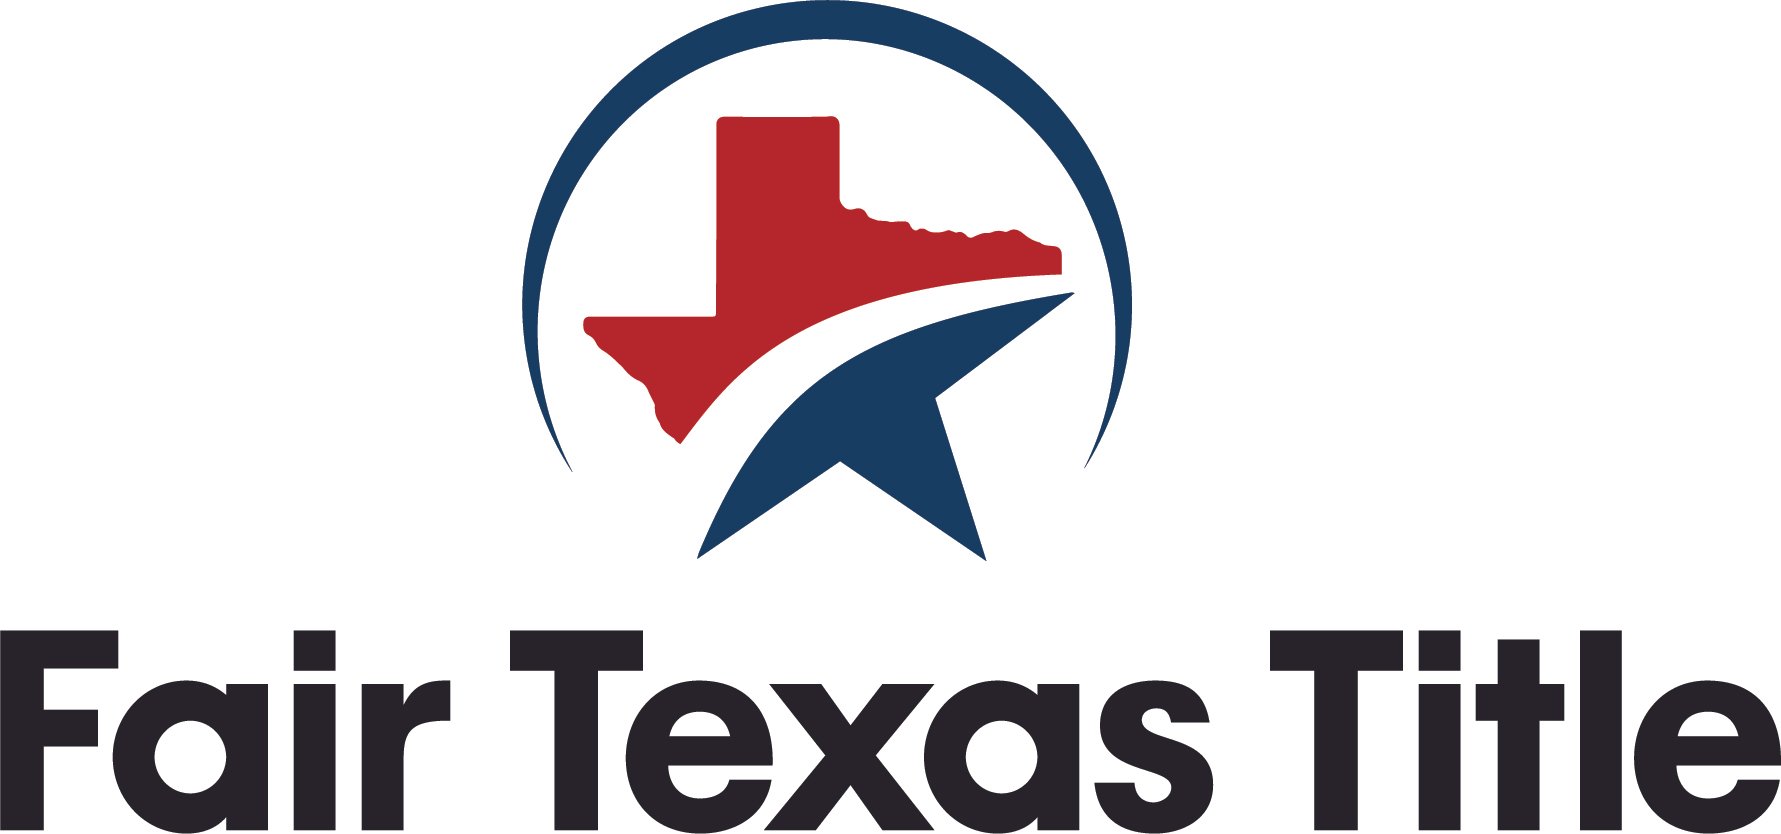 Fair Texas Logo - Full Color.jpg